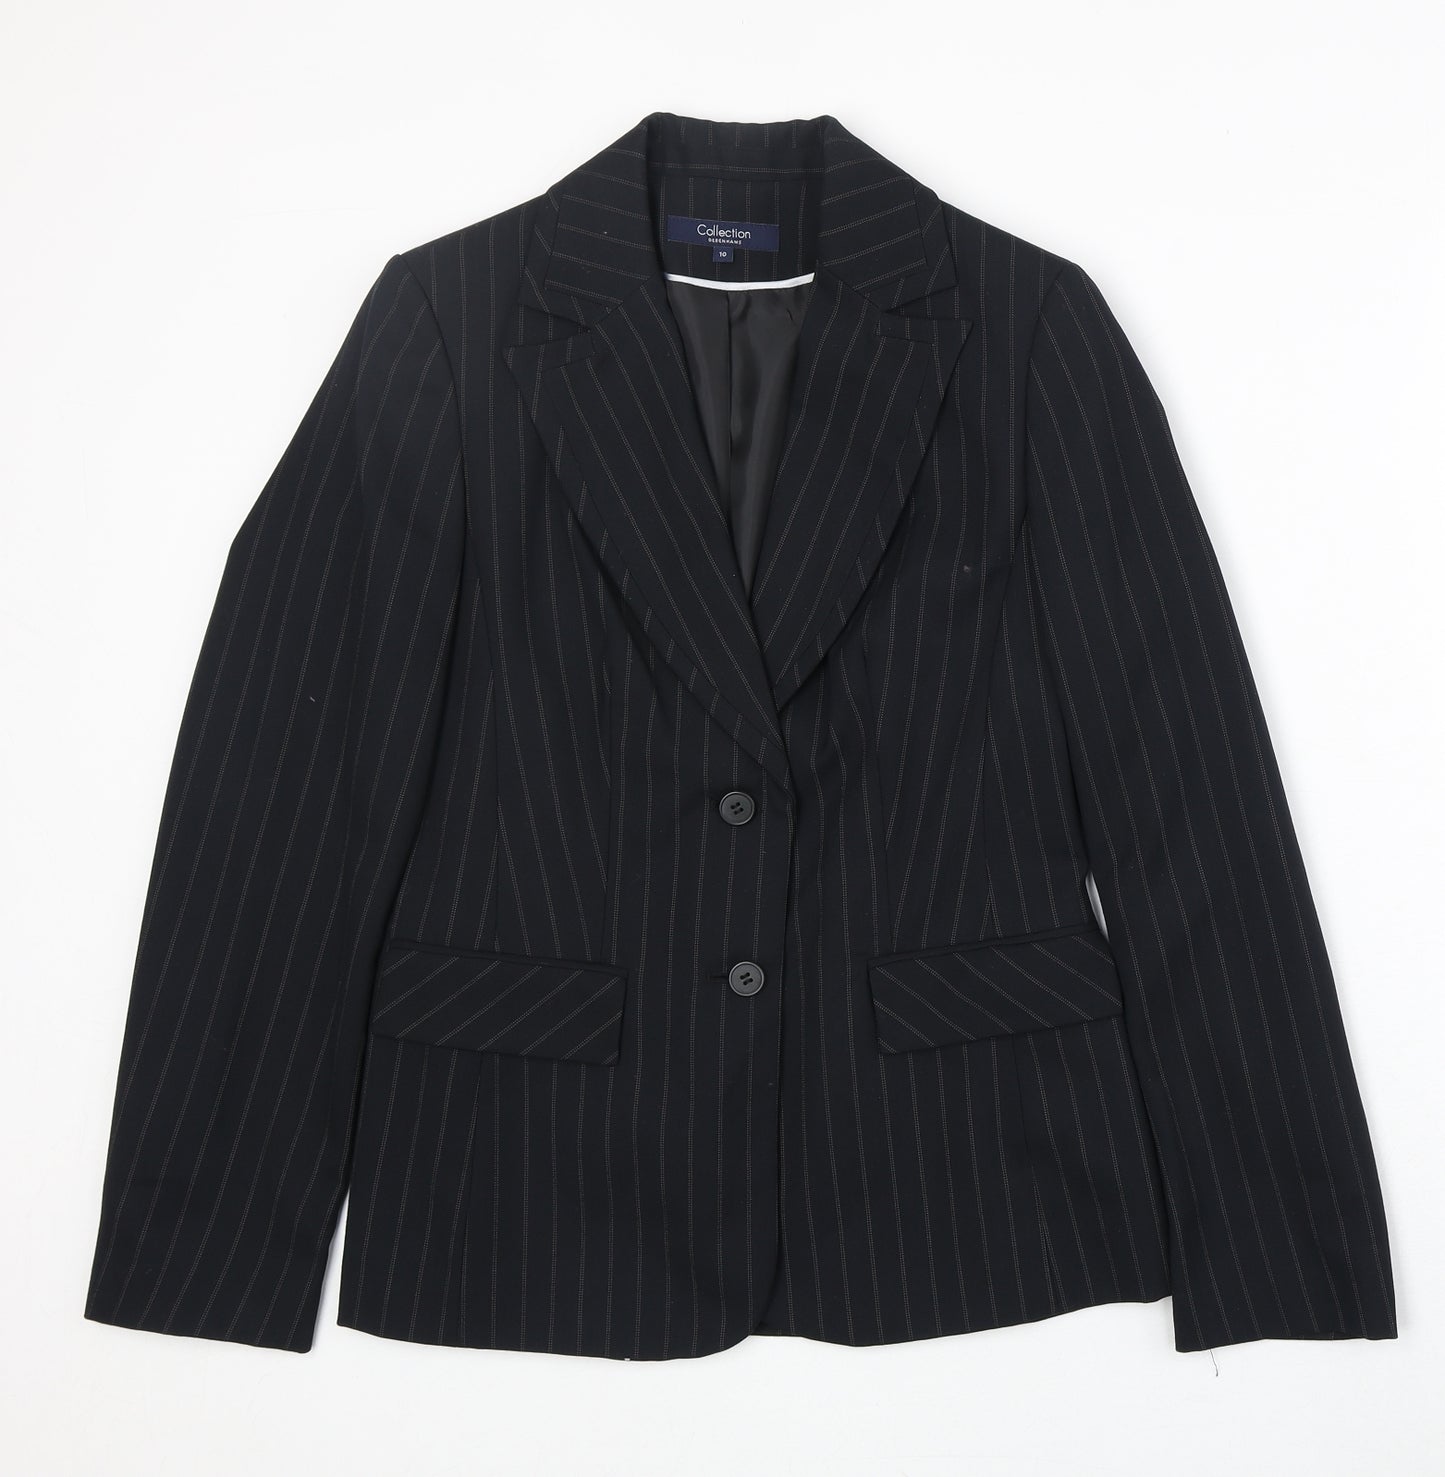 Debenhams Womens Black Striped Polyester Jacket Suit Jacket Size 10